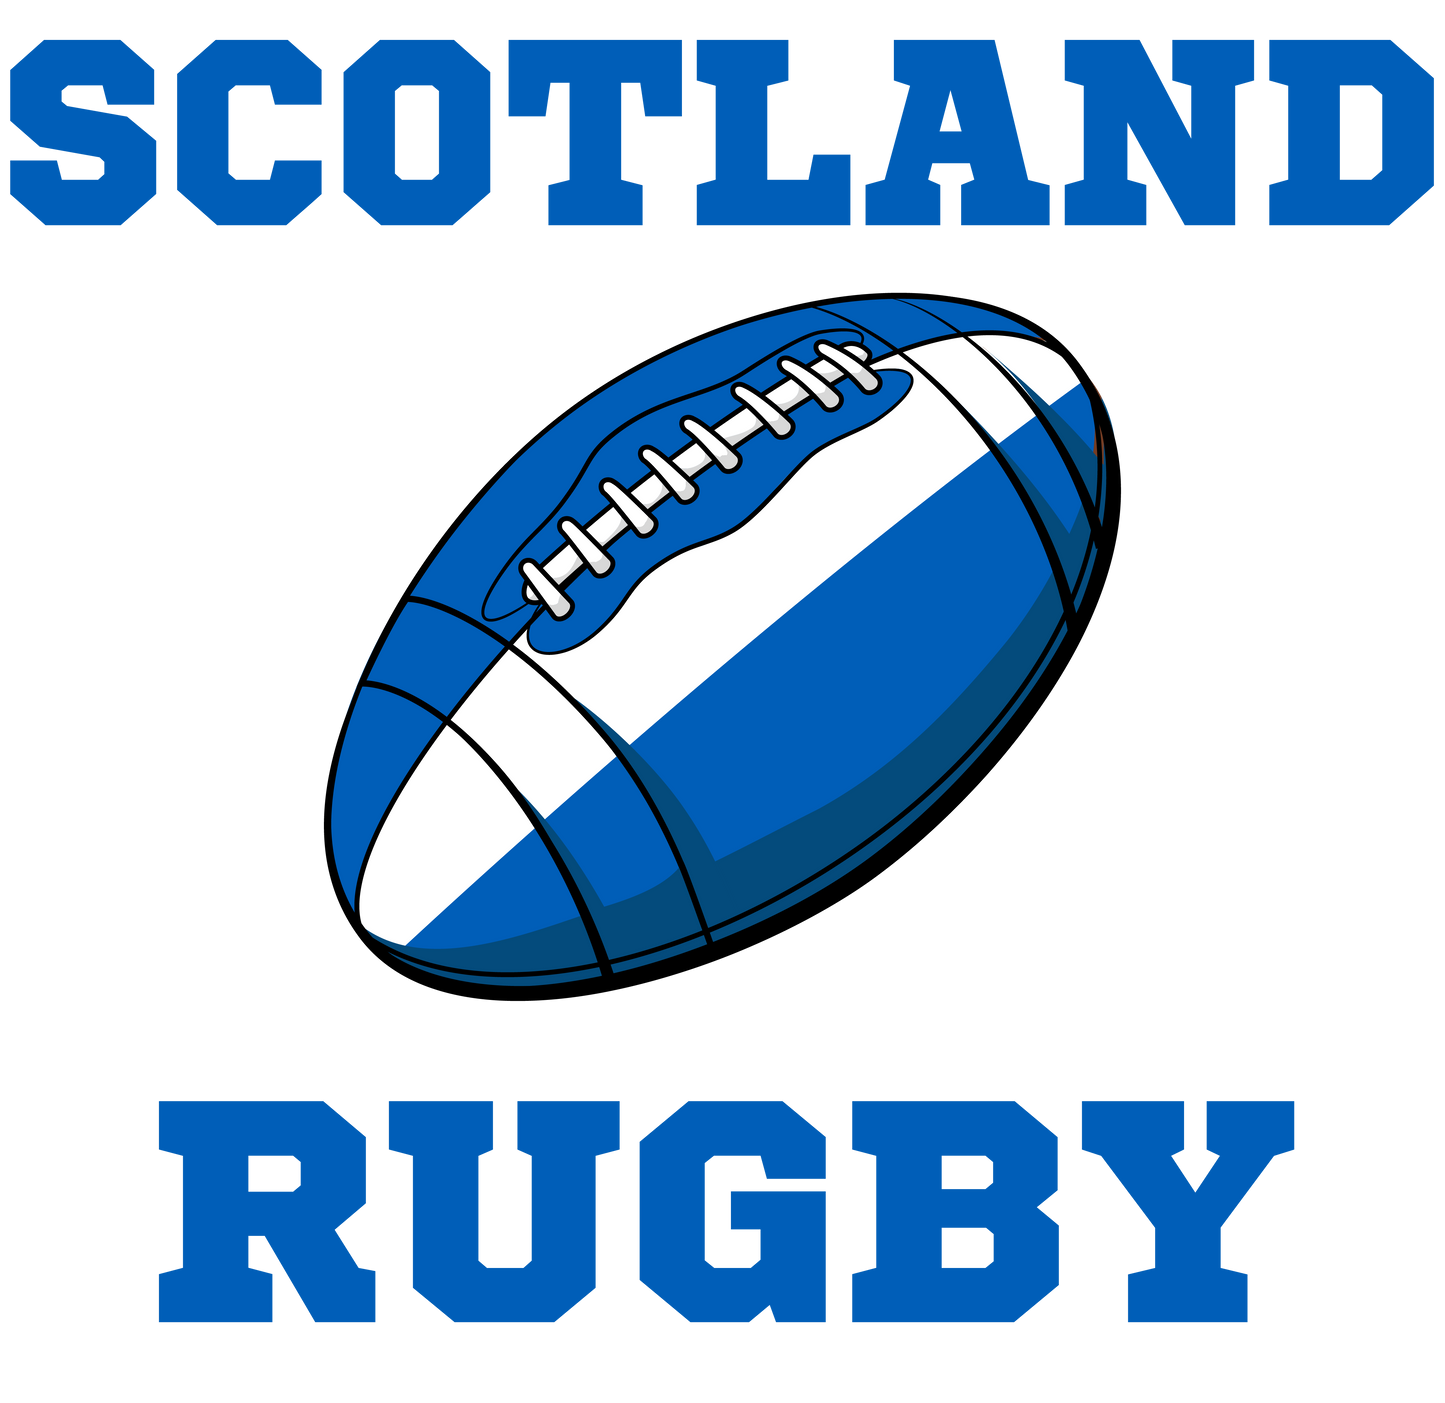 Scotland Rugby Ball Hoody (Black)